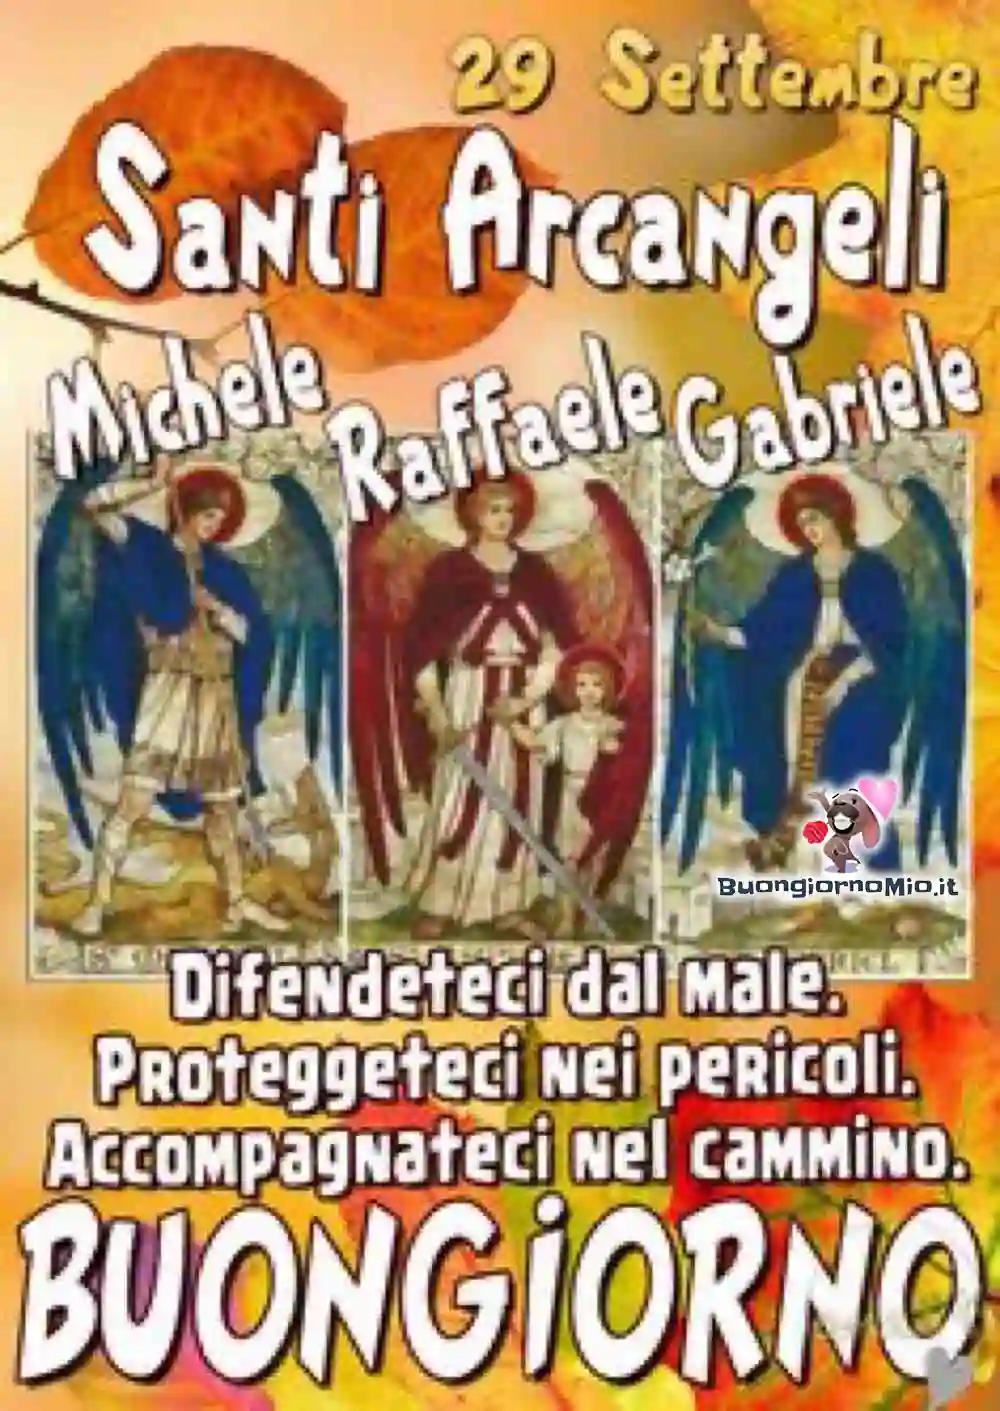 Santi Arcangeli Settembre